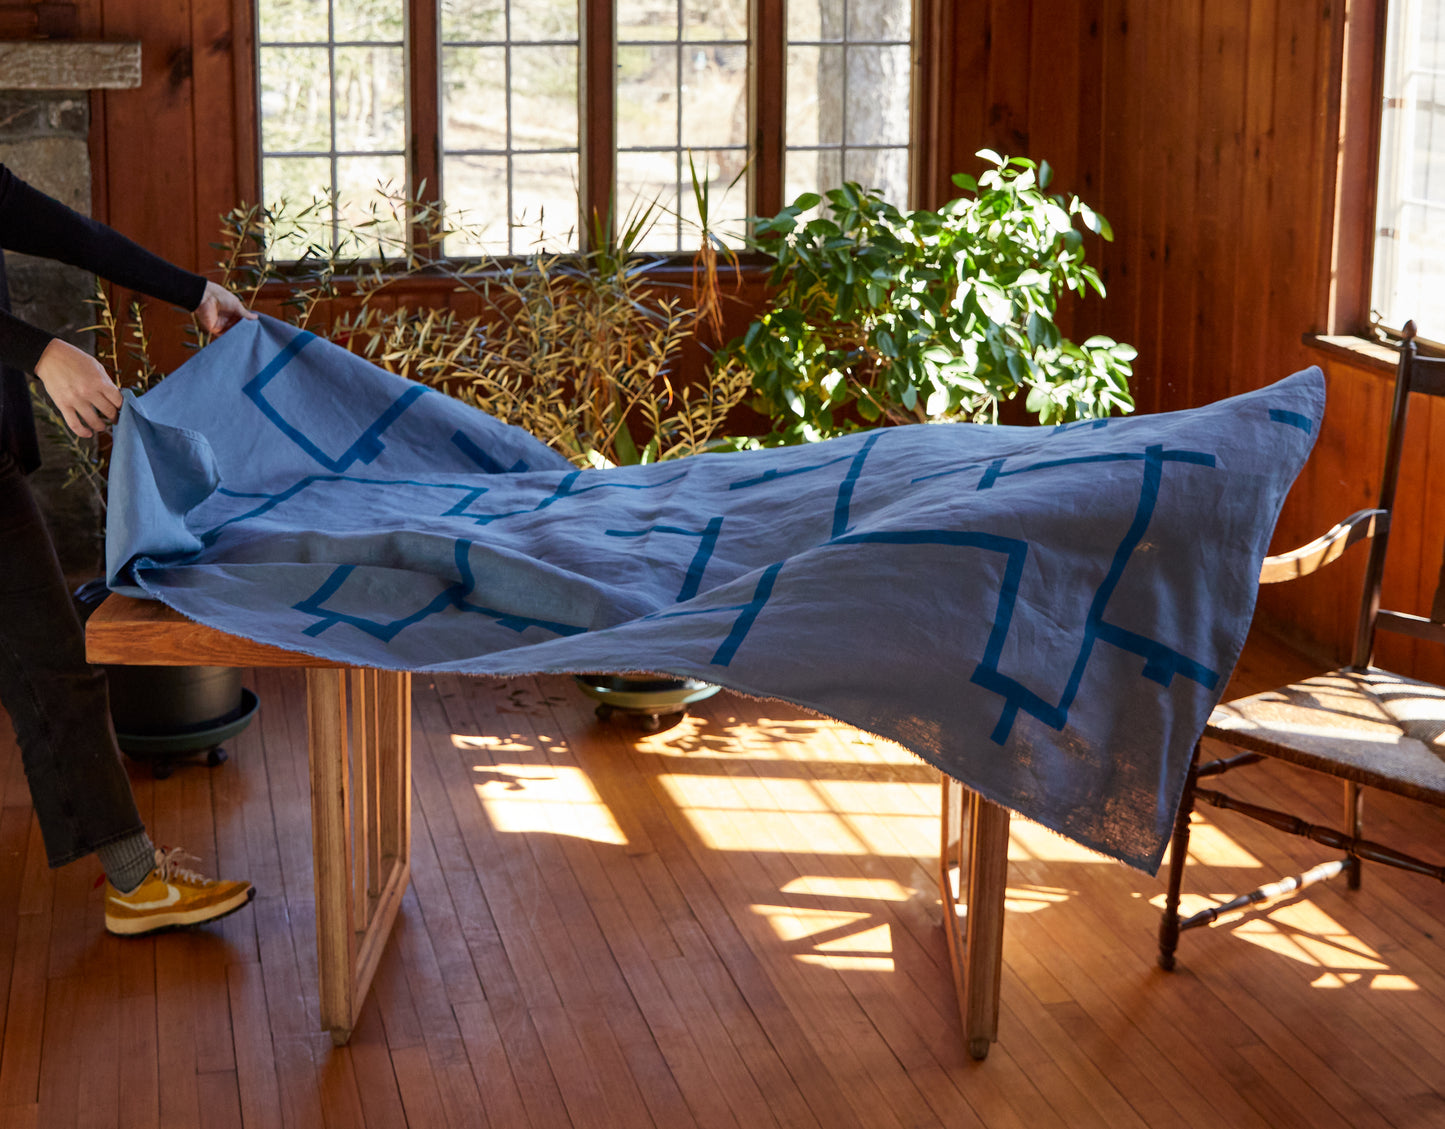 Painter Tape Linen Tablecloth, Blue